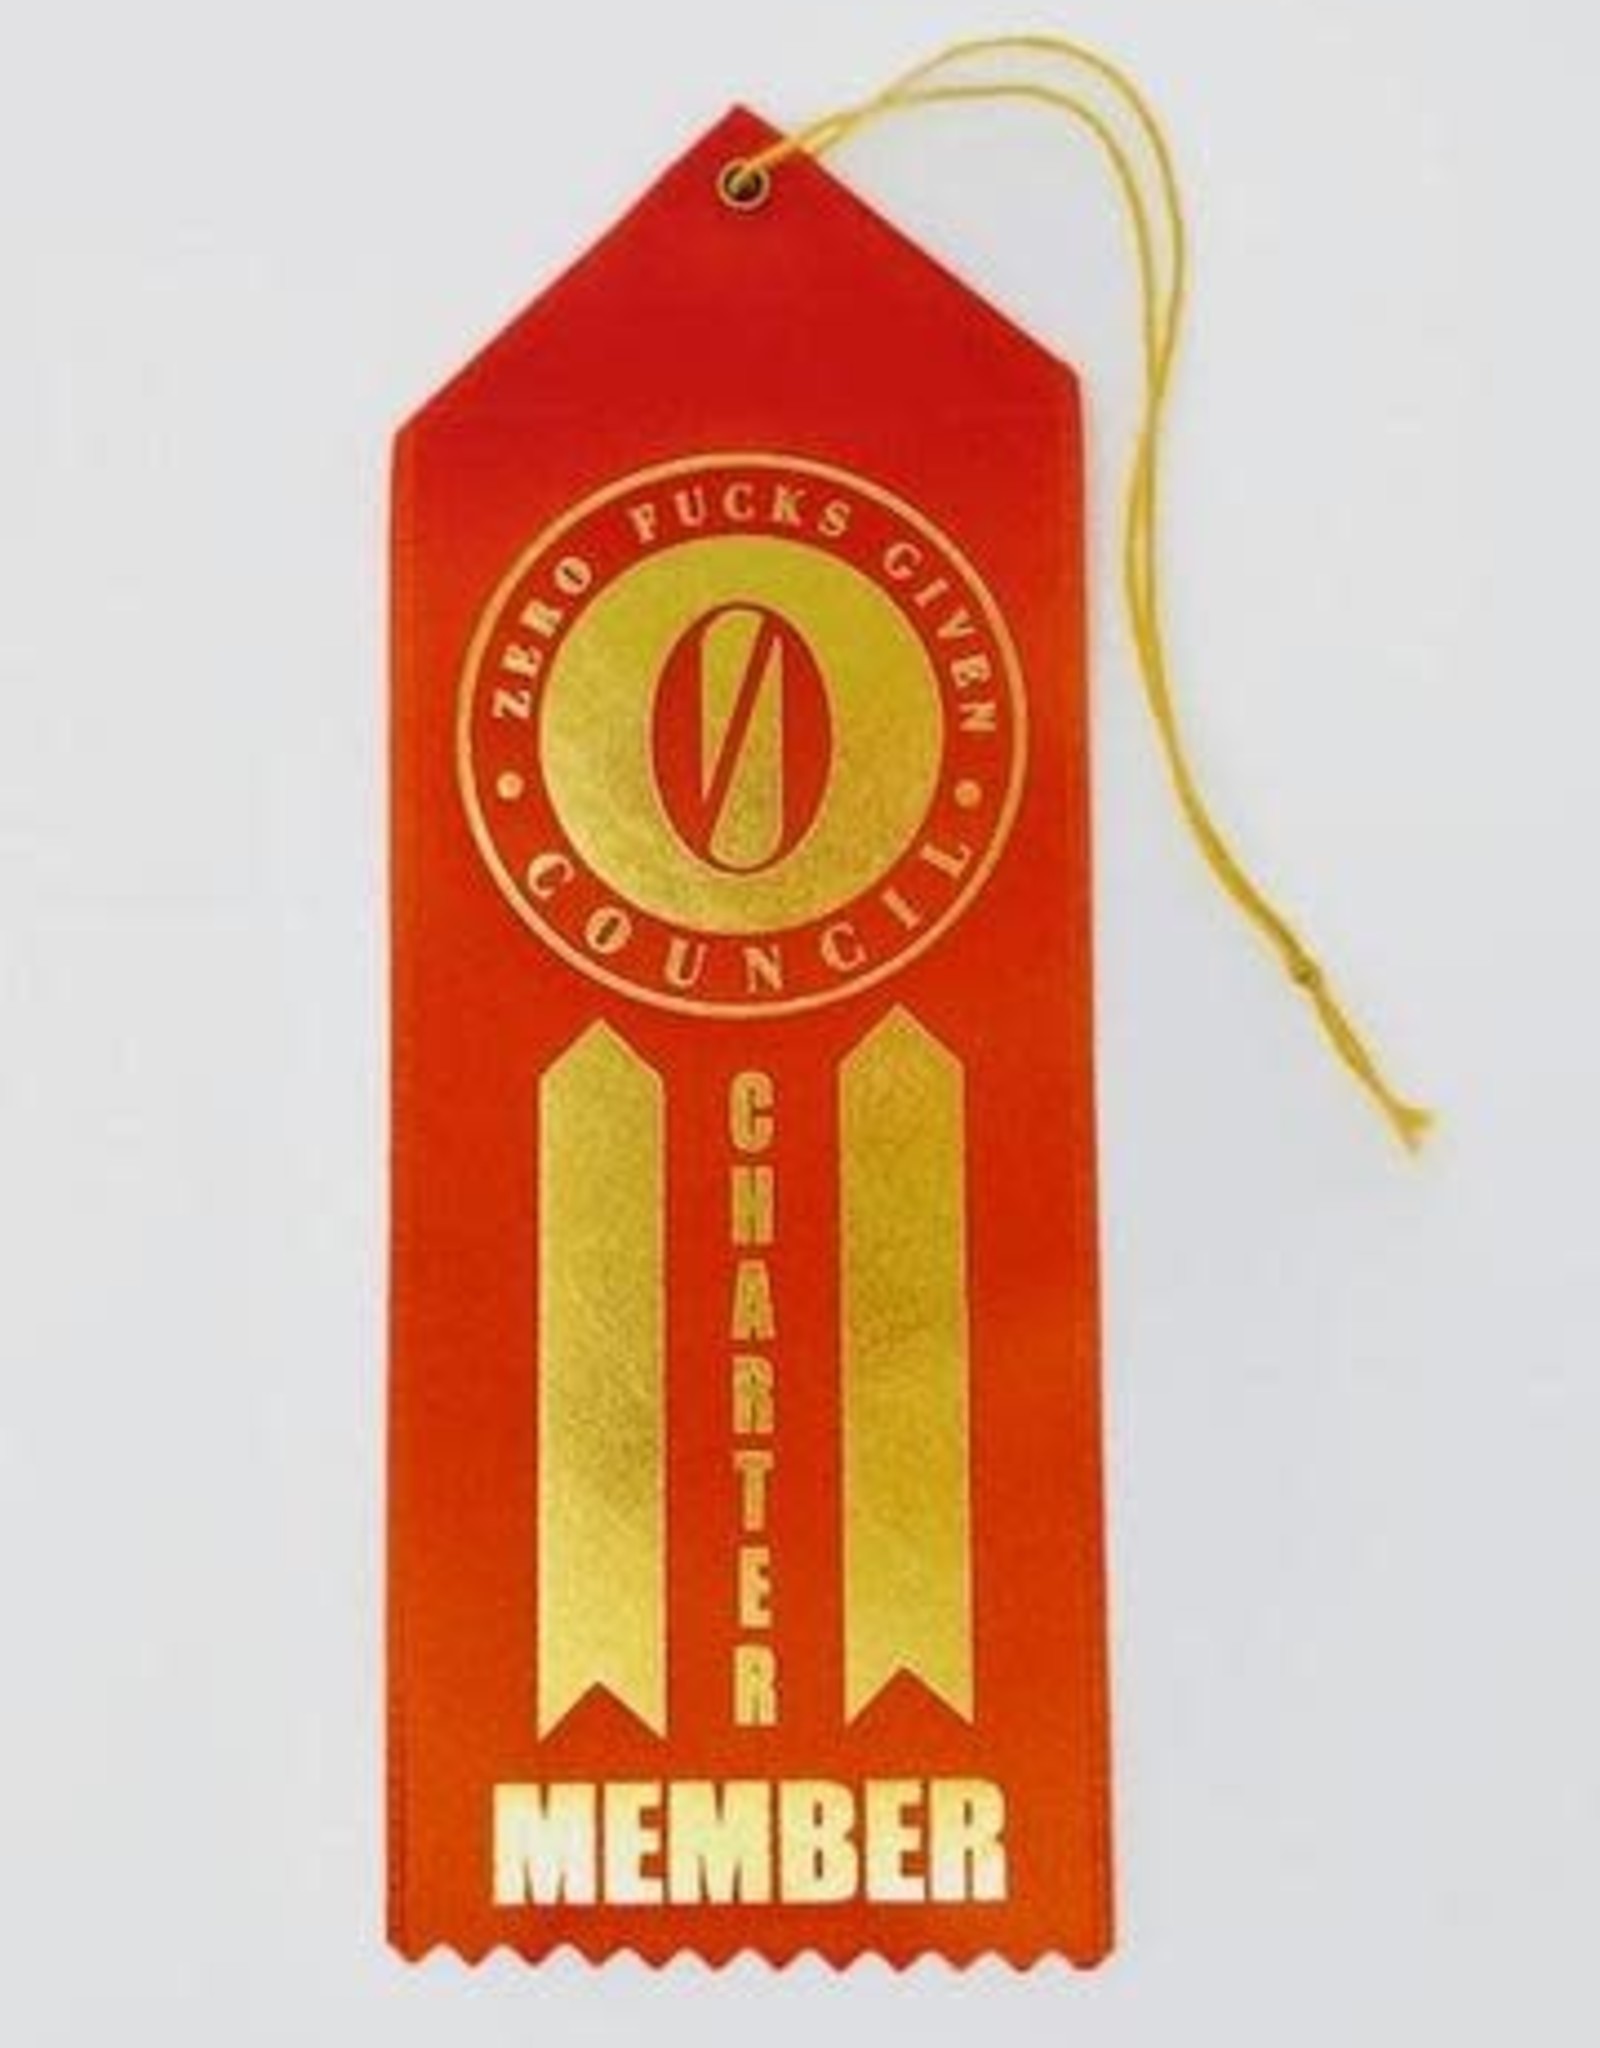 "Zero Fucks Given" Council; Award Ribbon